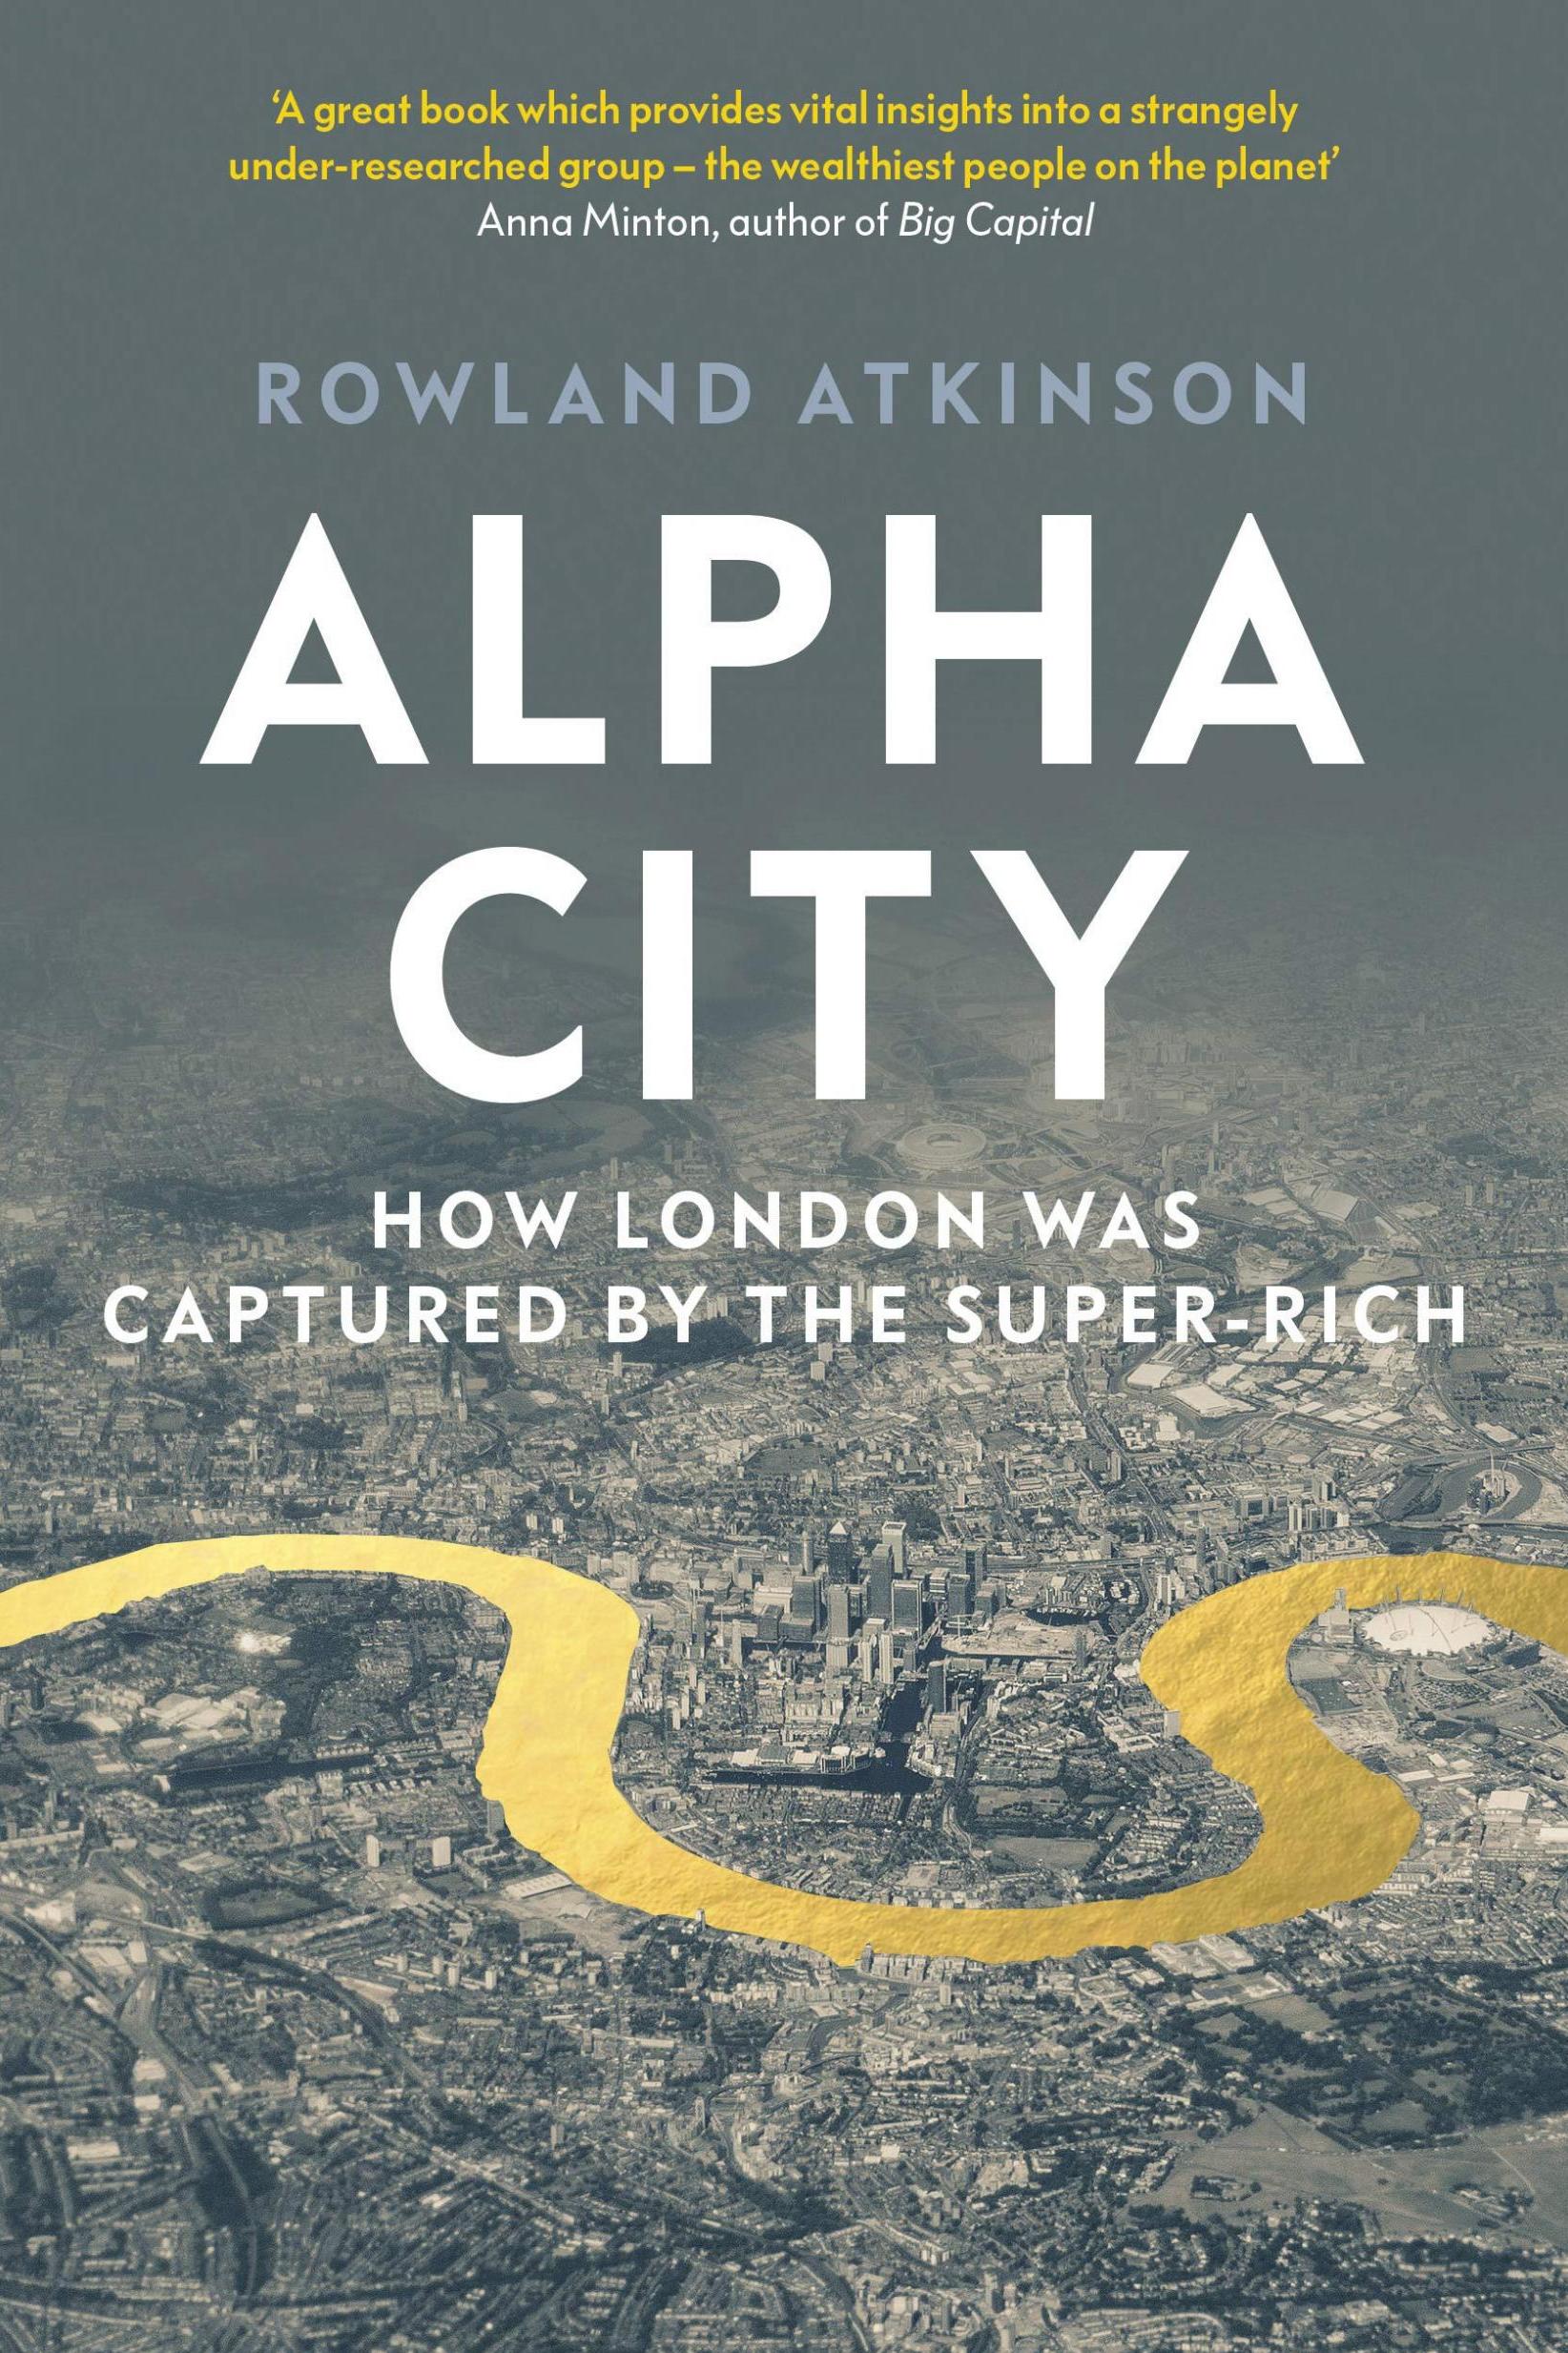 Rowland Atkinson’s ‘Alpha City’